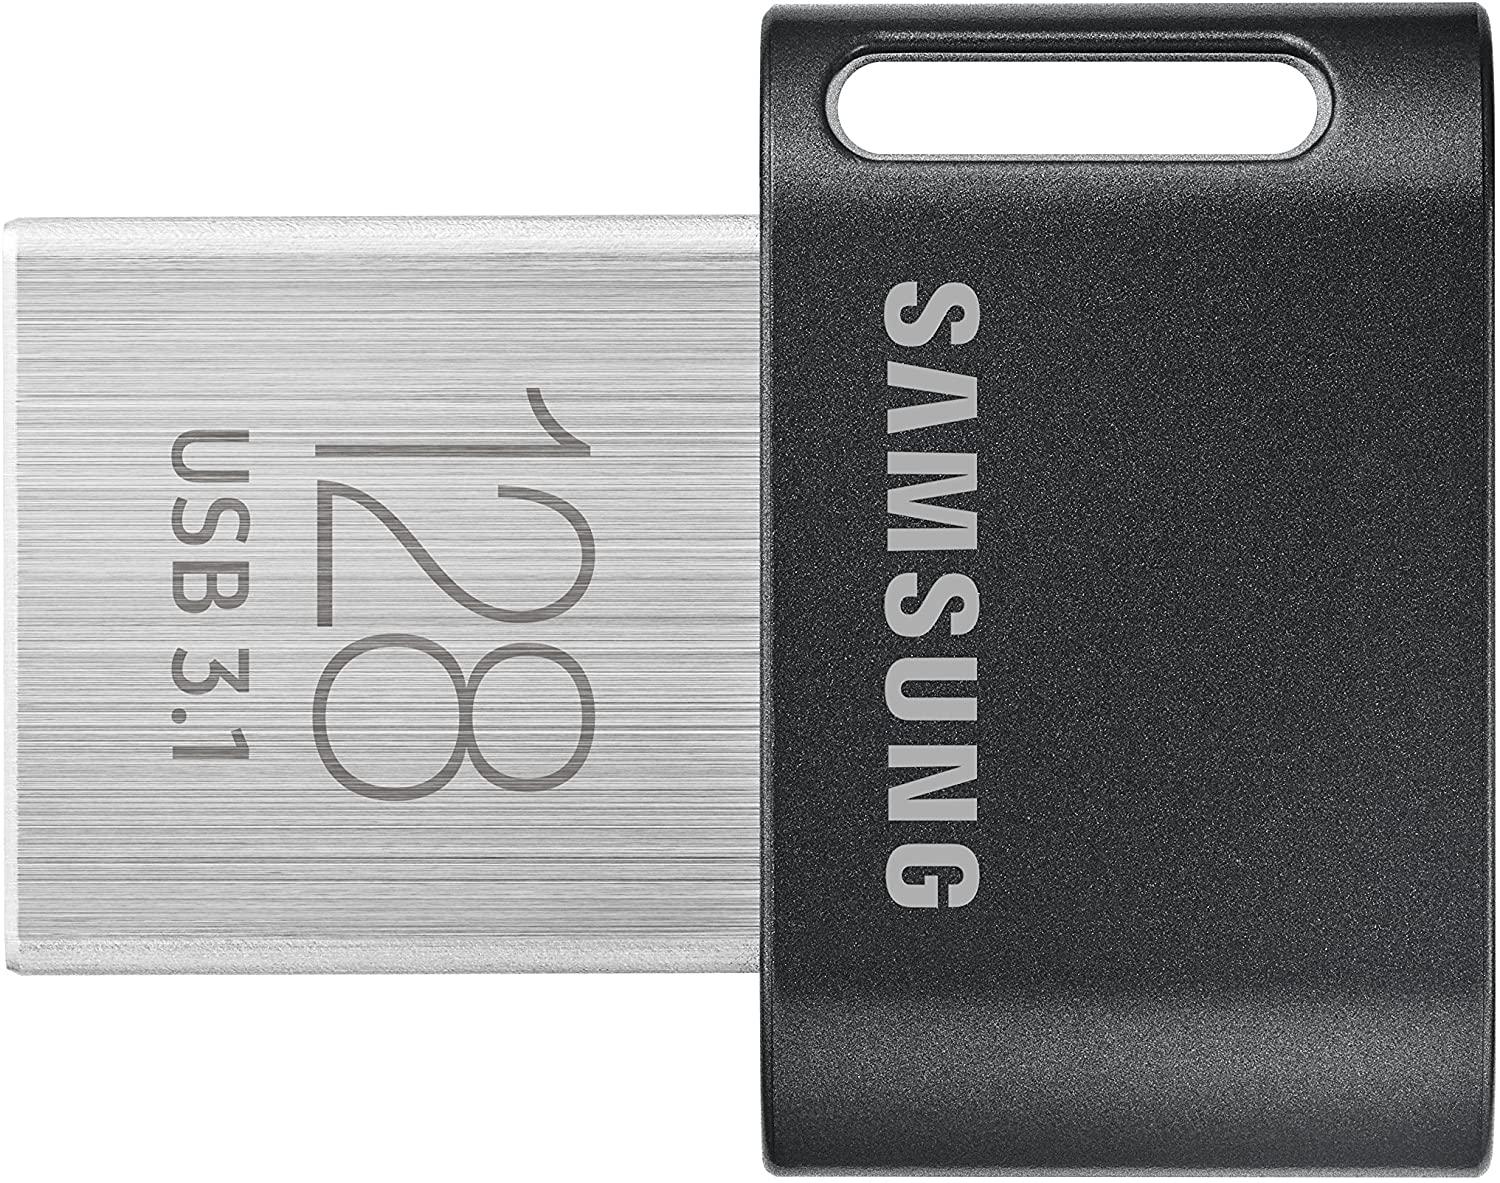 Samsung FIT Plus 128GB USB 3.1 Flash Drive for $15.99